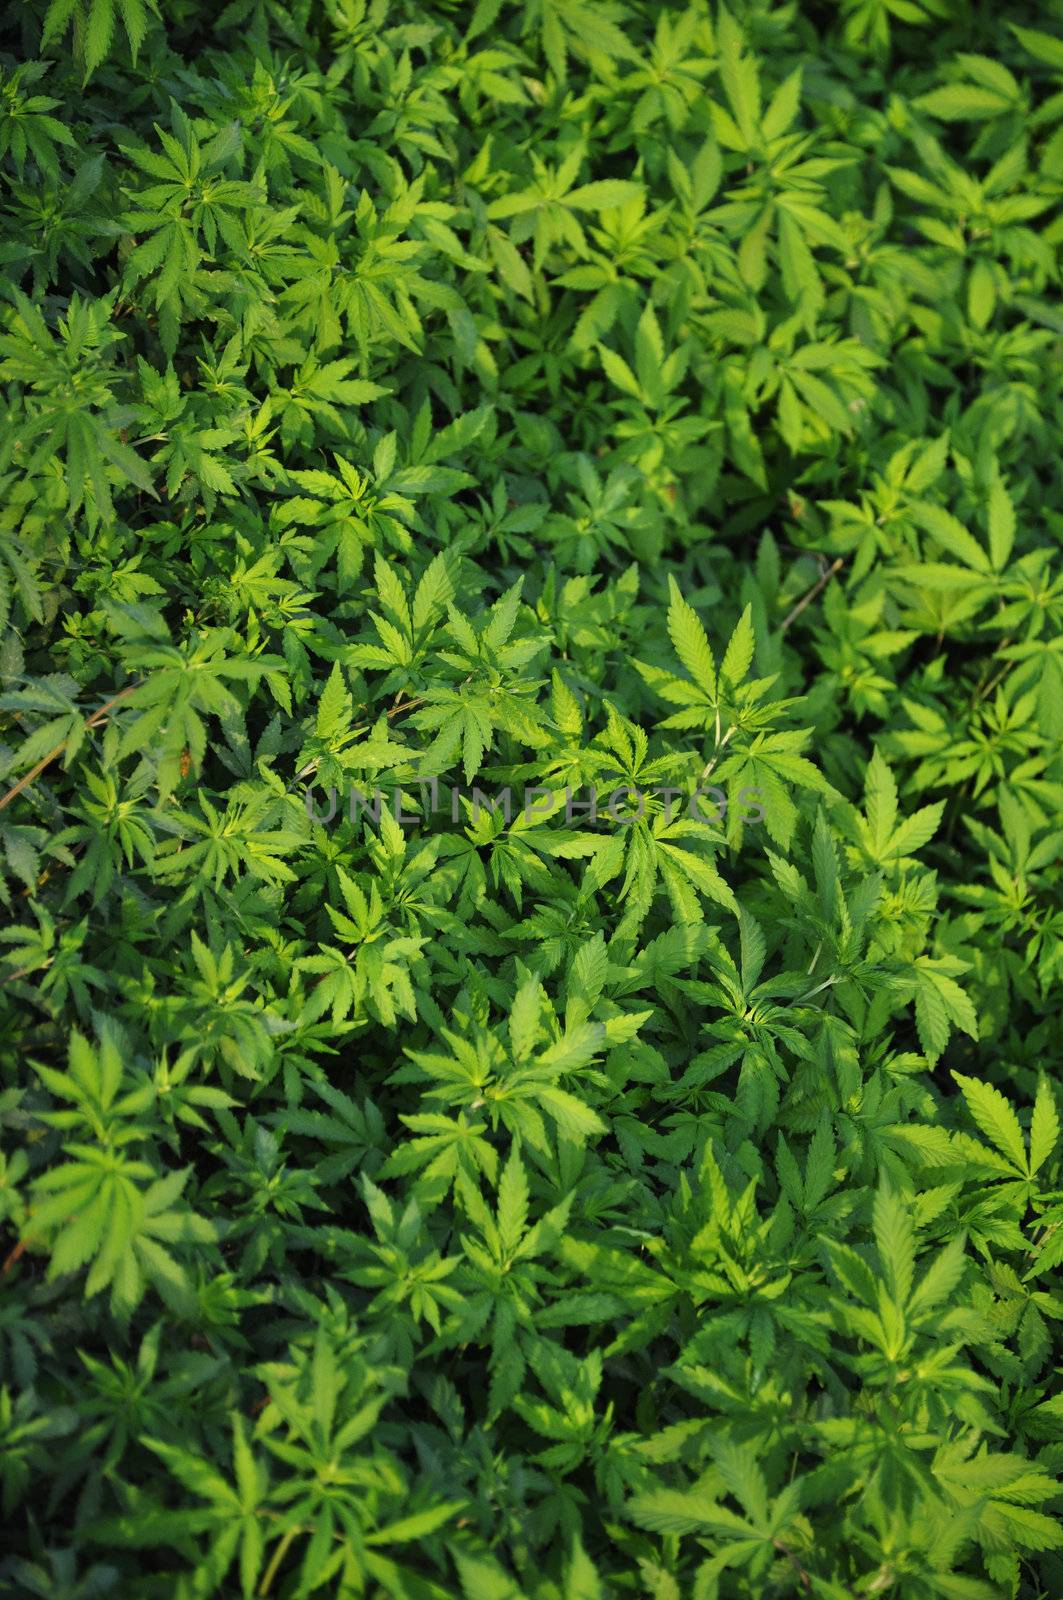 Marijuana Leaves by kdreams02